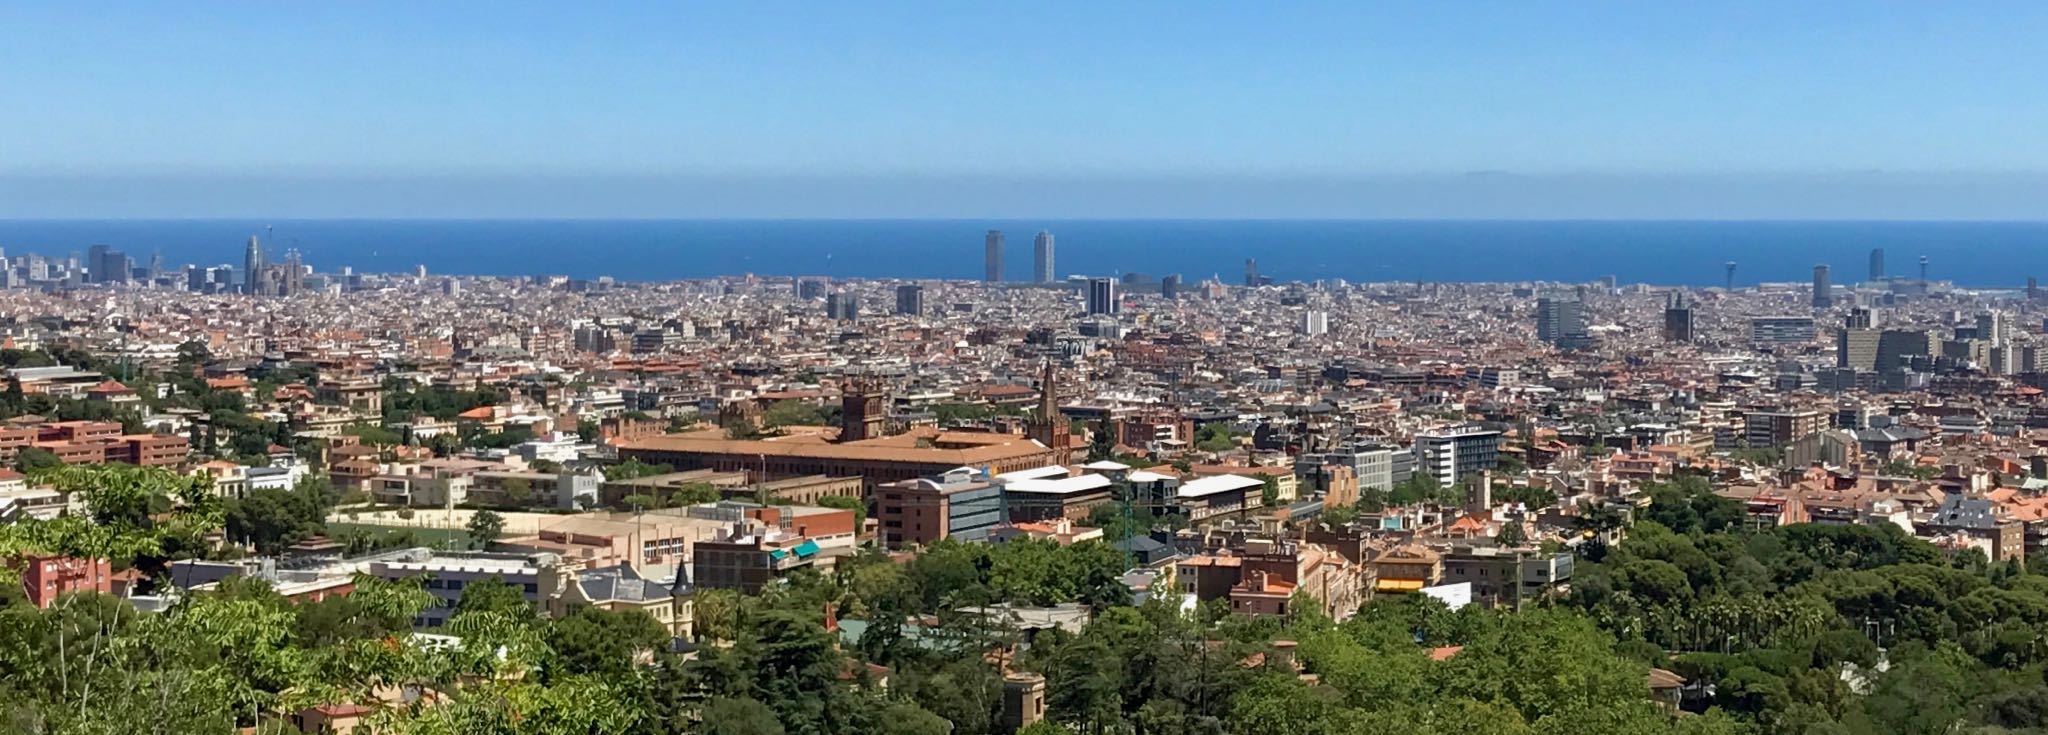 City of Barcelona